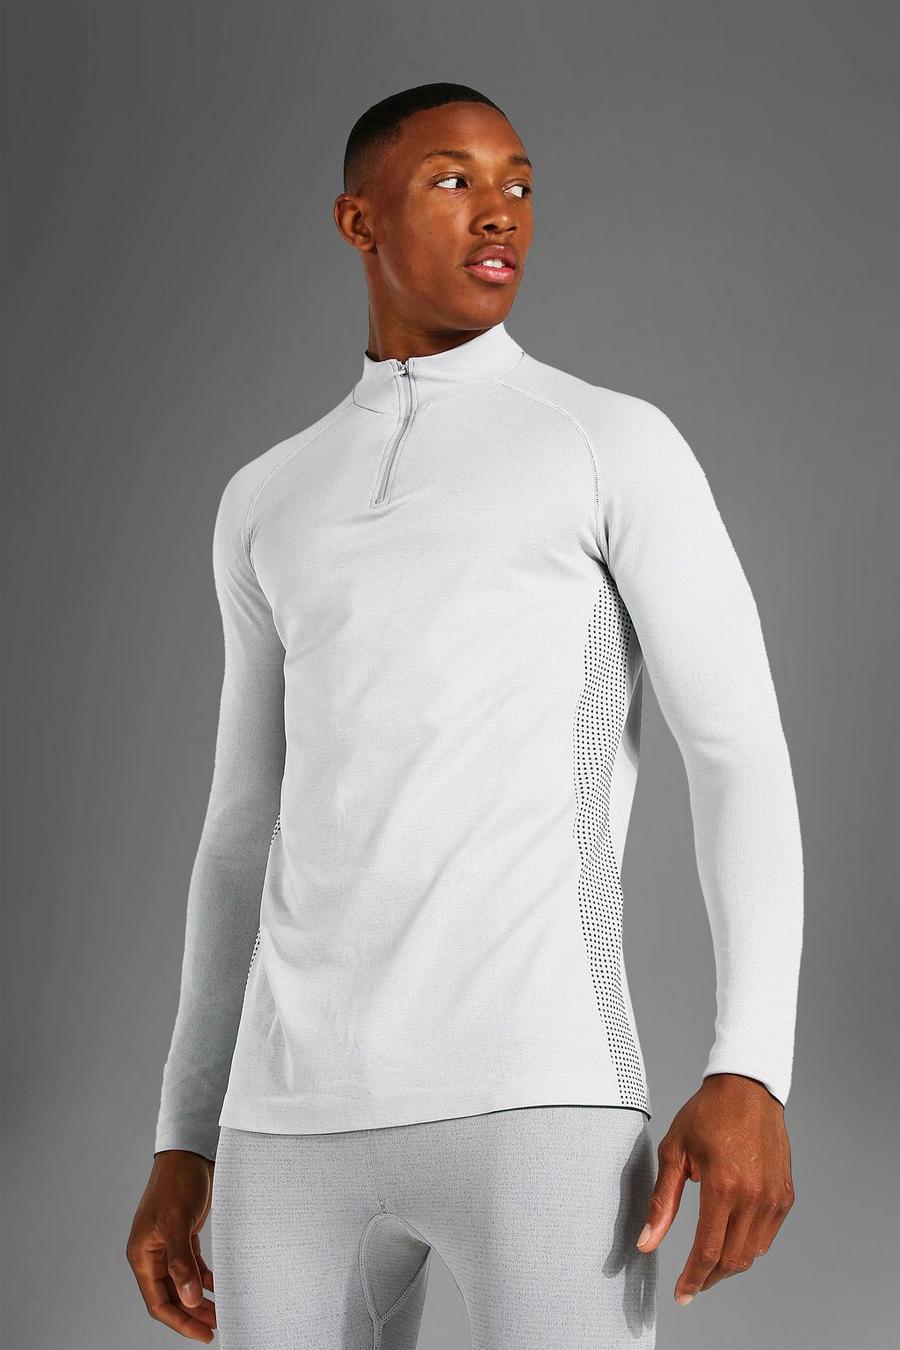 White Men's Running Shirt Gym Shirt Seamless Long Sleeve Top